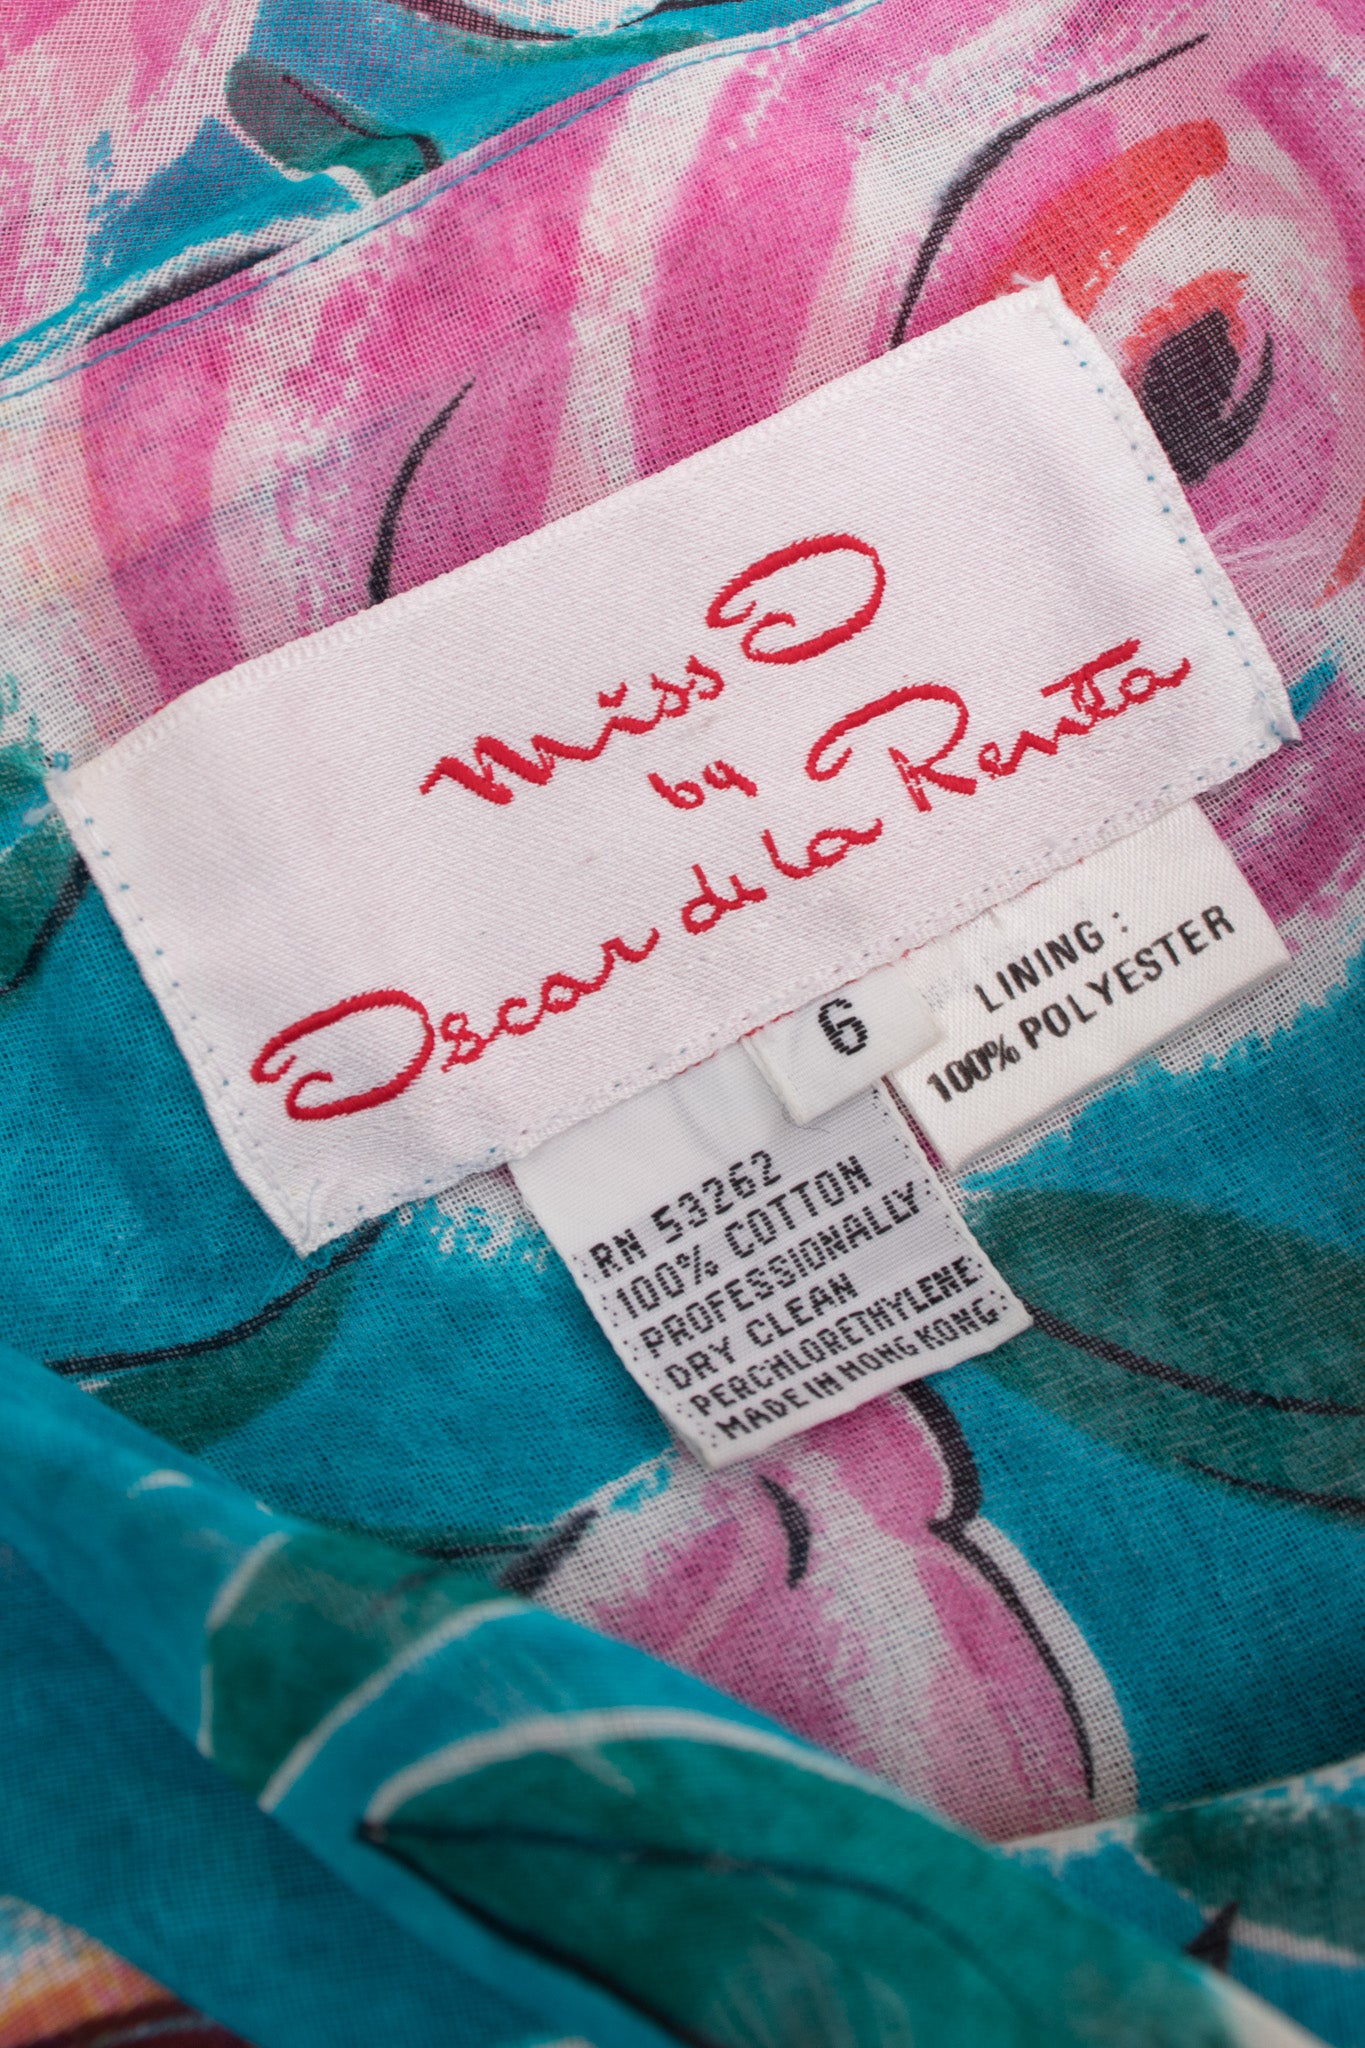 Miss O Oscar de la Renta Cotton Batiste Sheer Gathered Tropical Rose Skirt